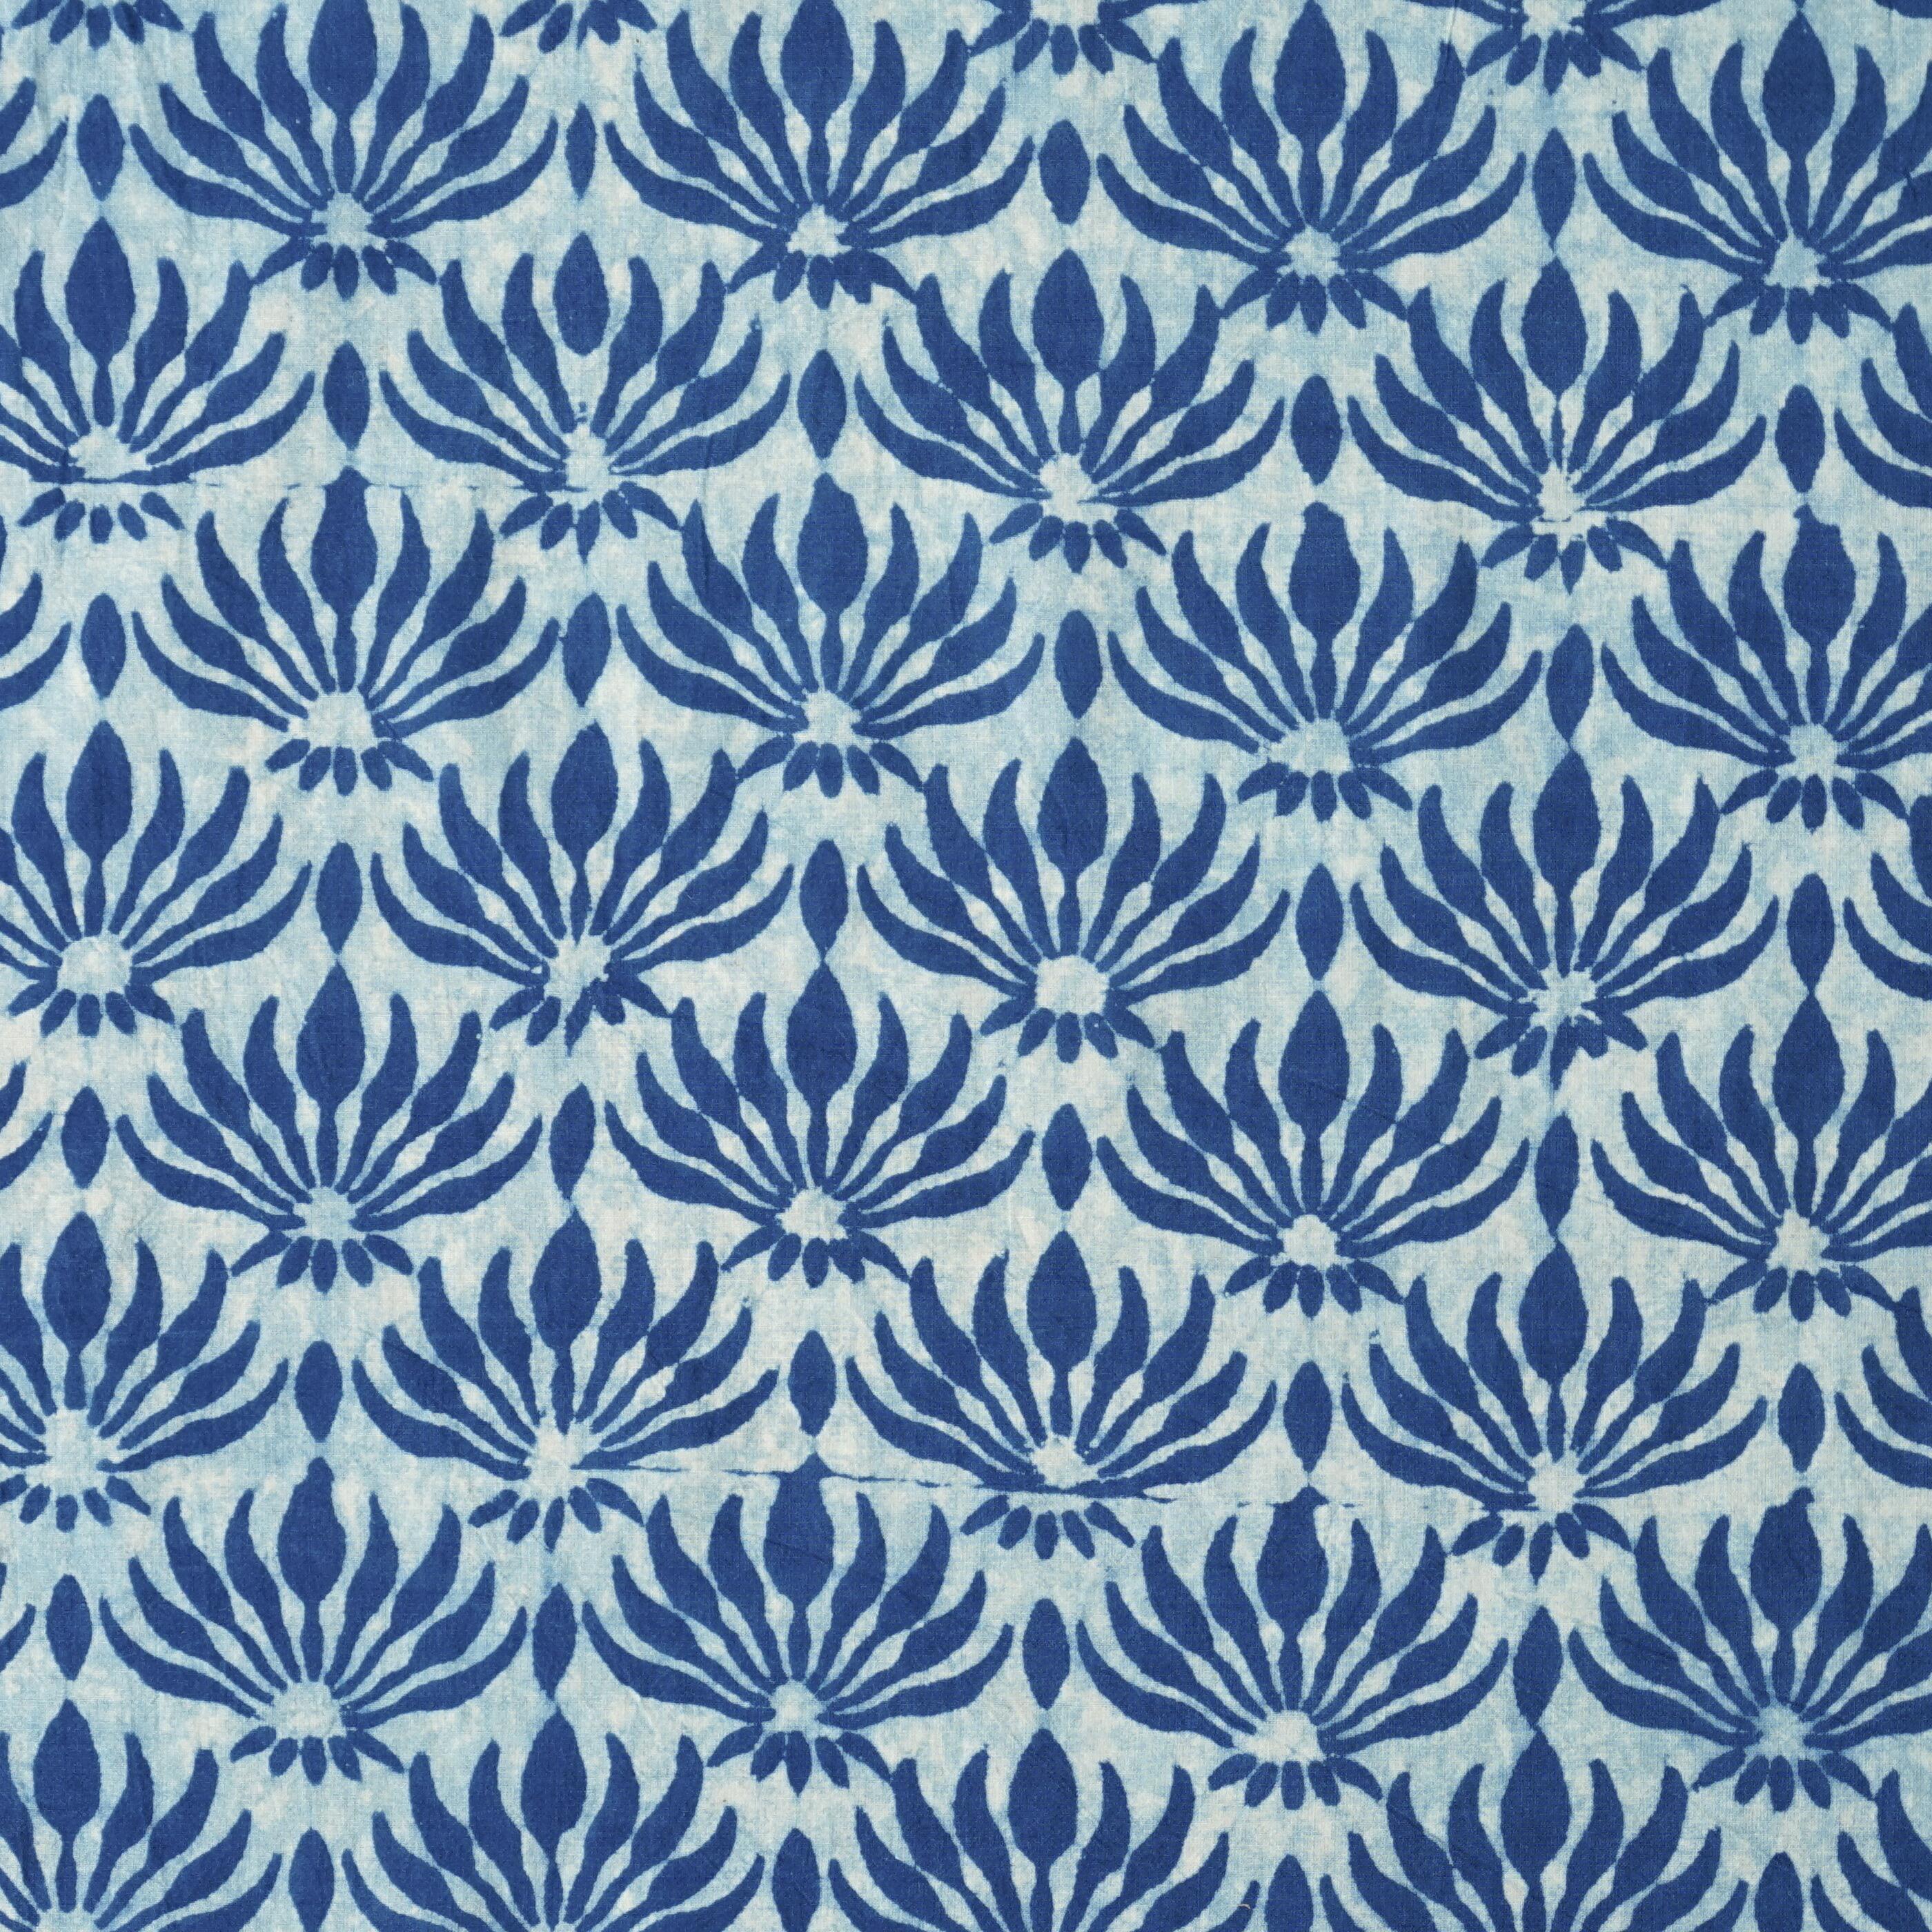 100% Block-Printed Cotton Fabric from India - Ajrak - Indigo White Lotus Flower Print - Flat